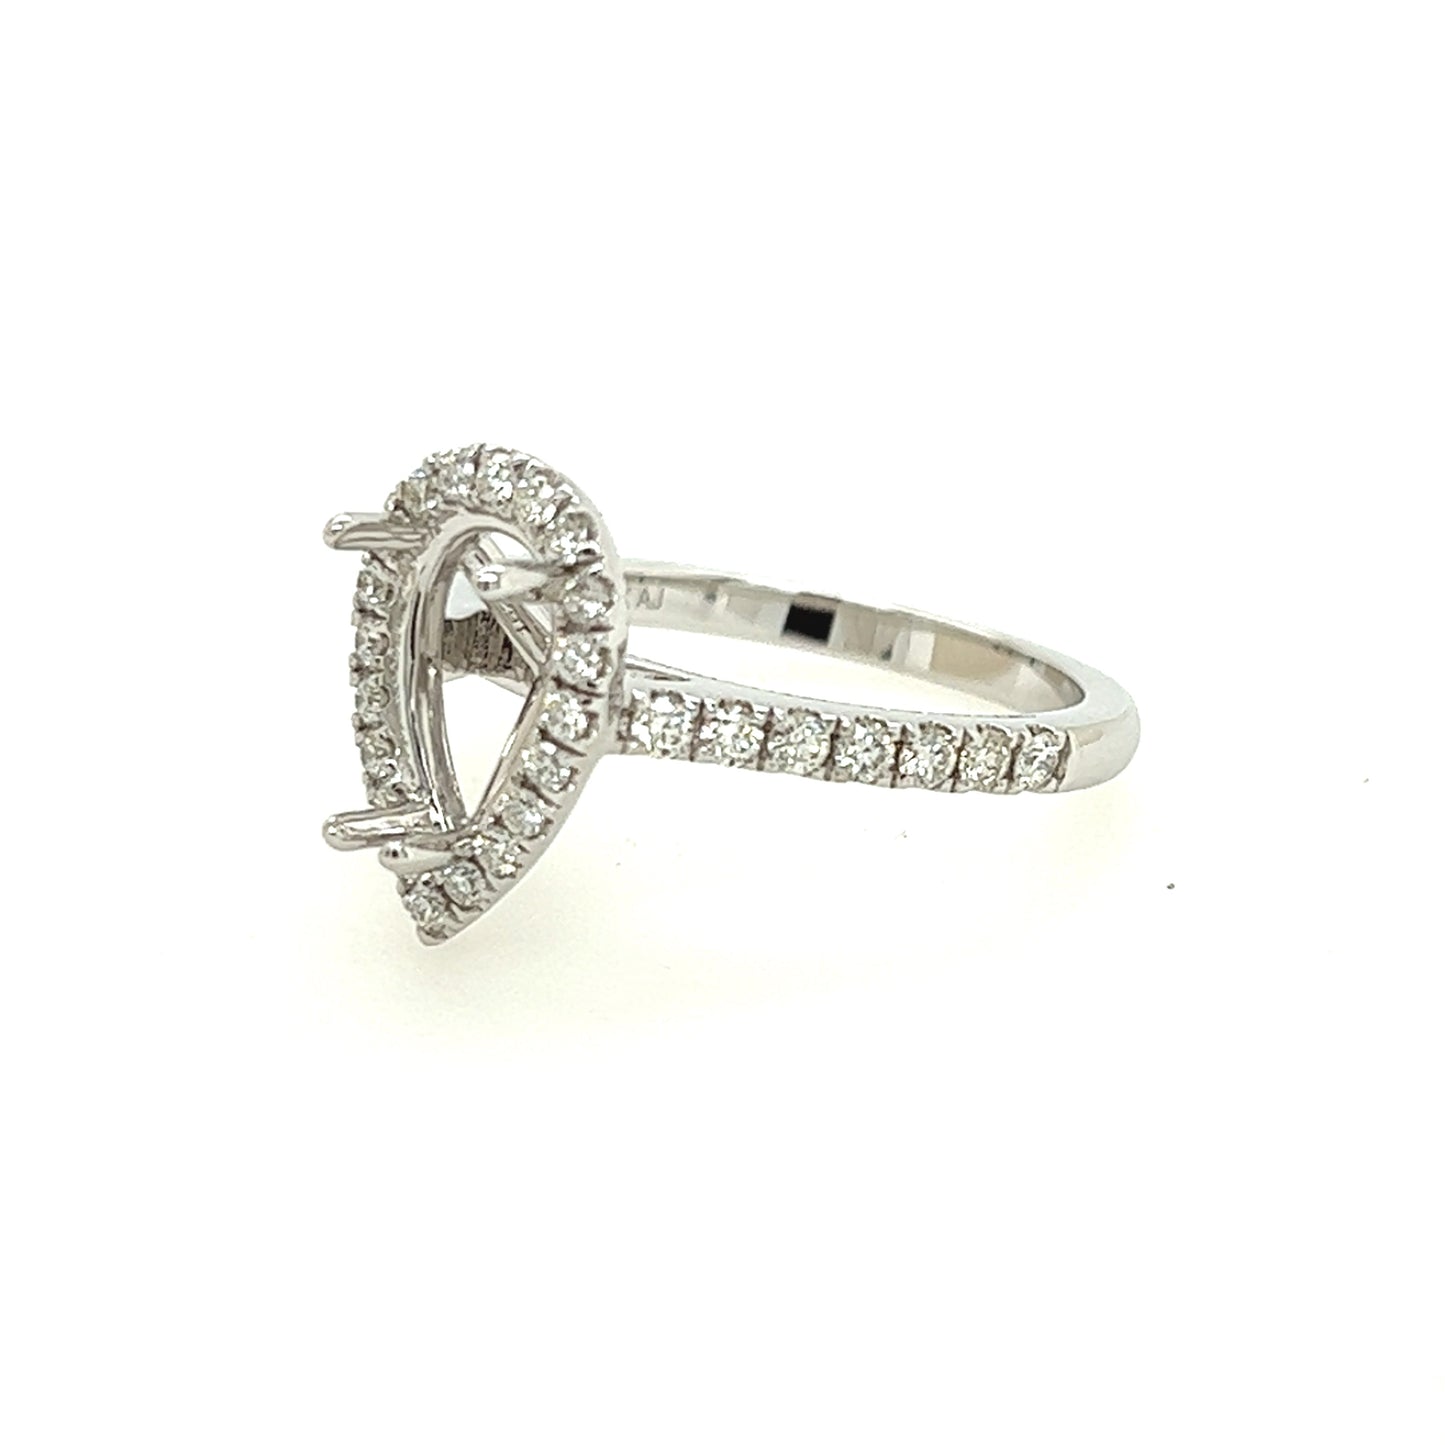 17627R Ring With Diamond